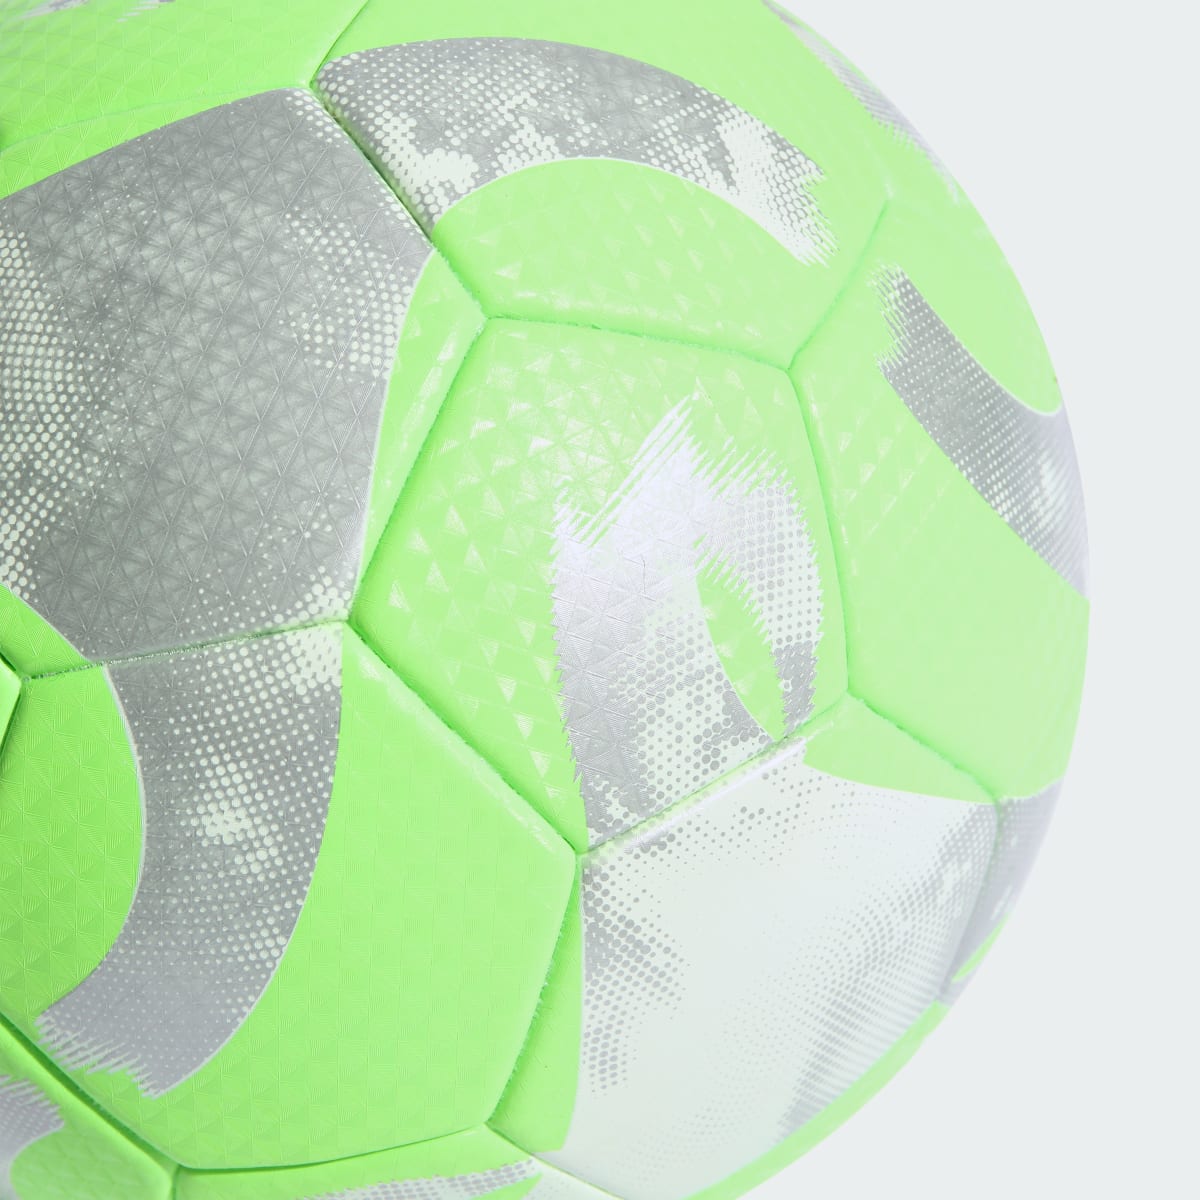 Adidas Tiro League Thermally Bonded Football. 4